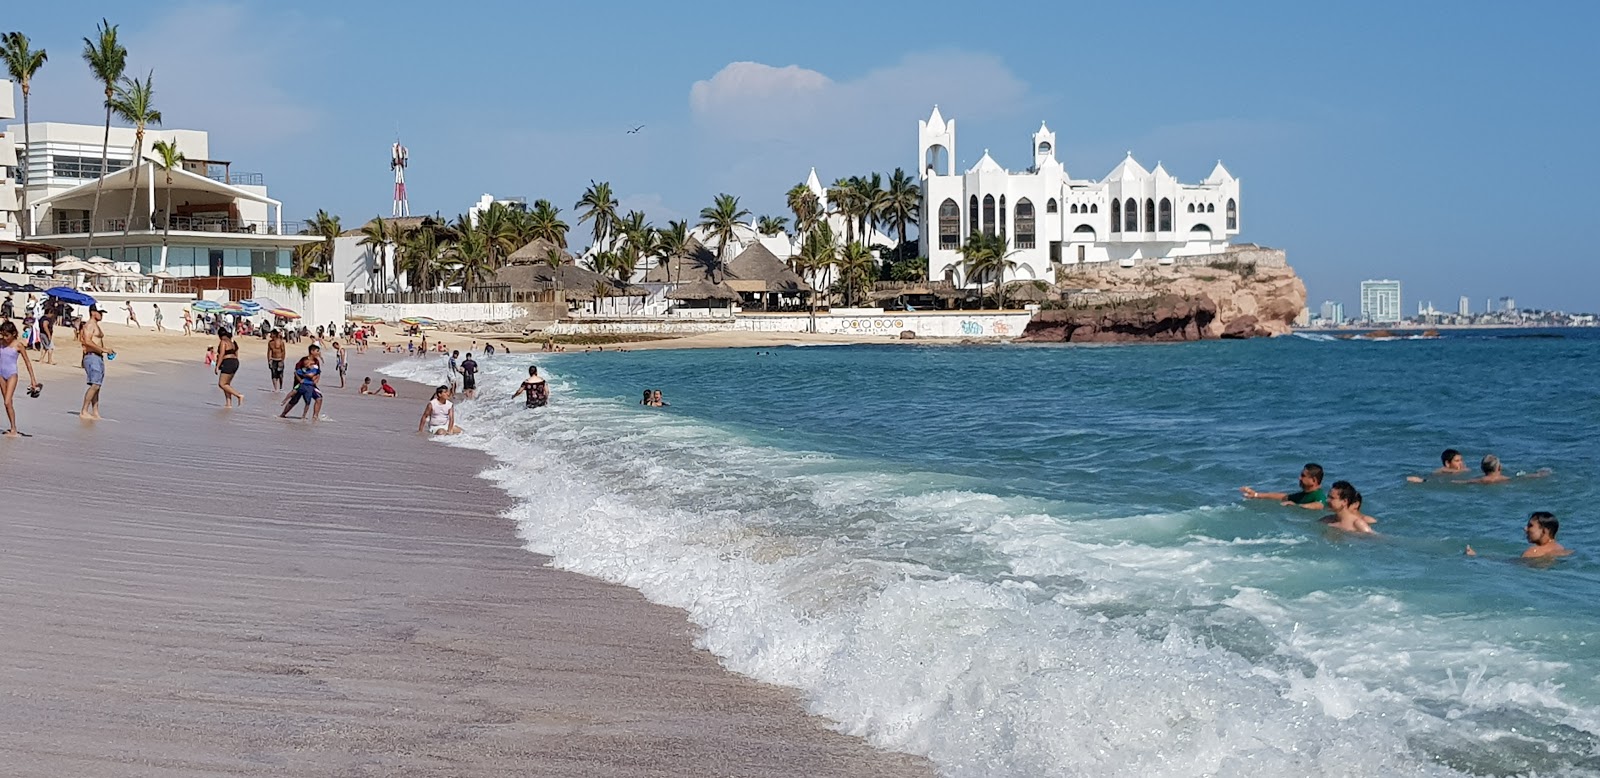 Photo of Gaviotas beach - popular place among relax connoisseurs